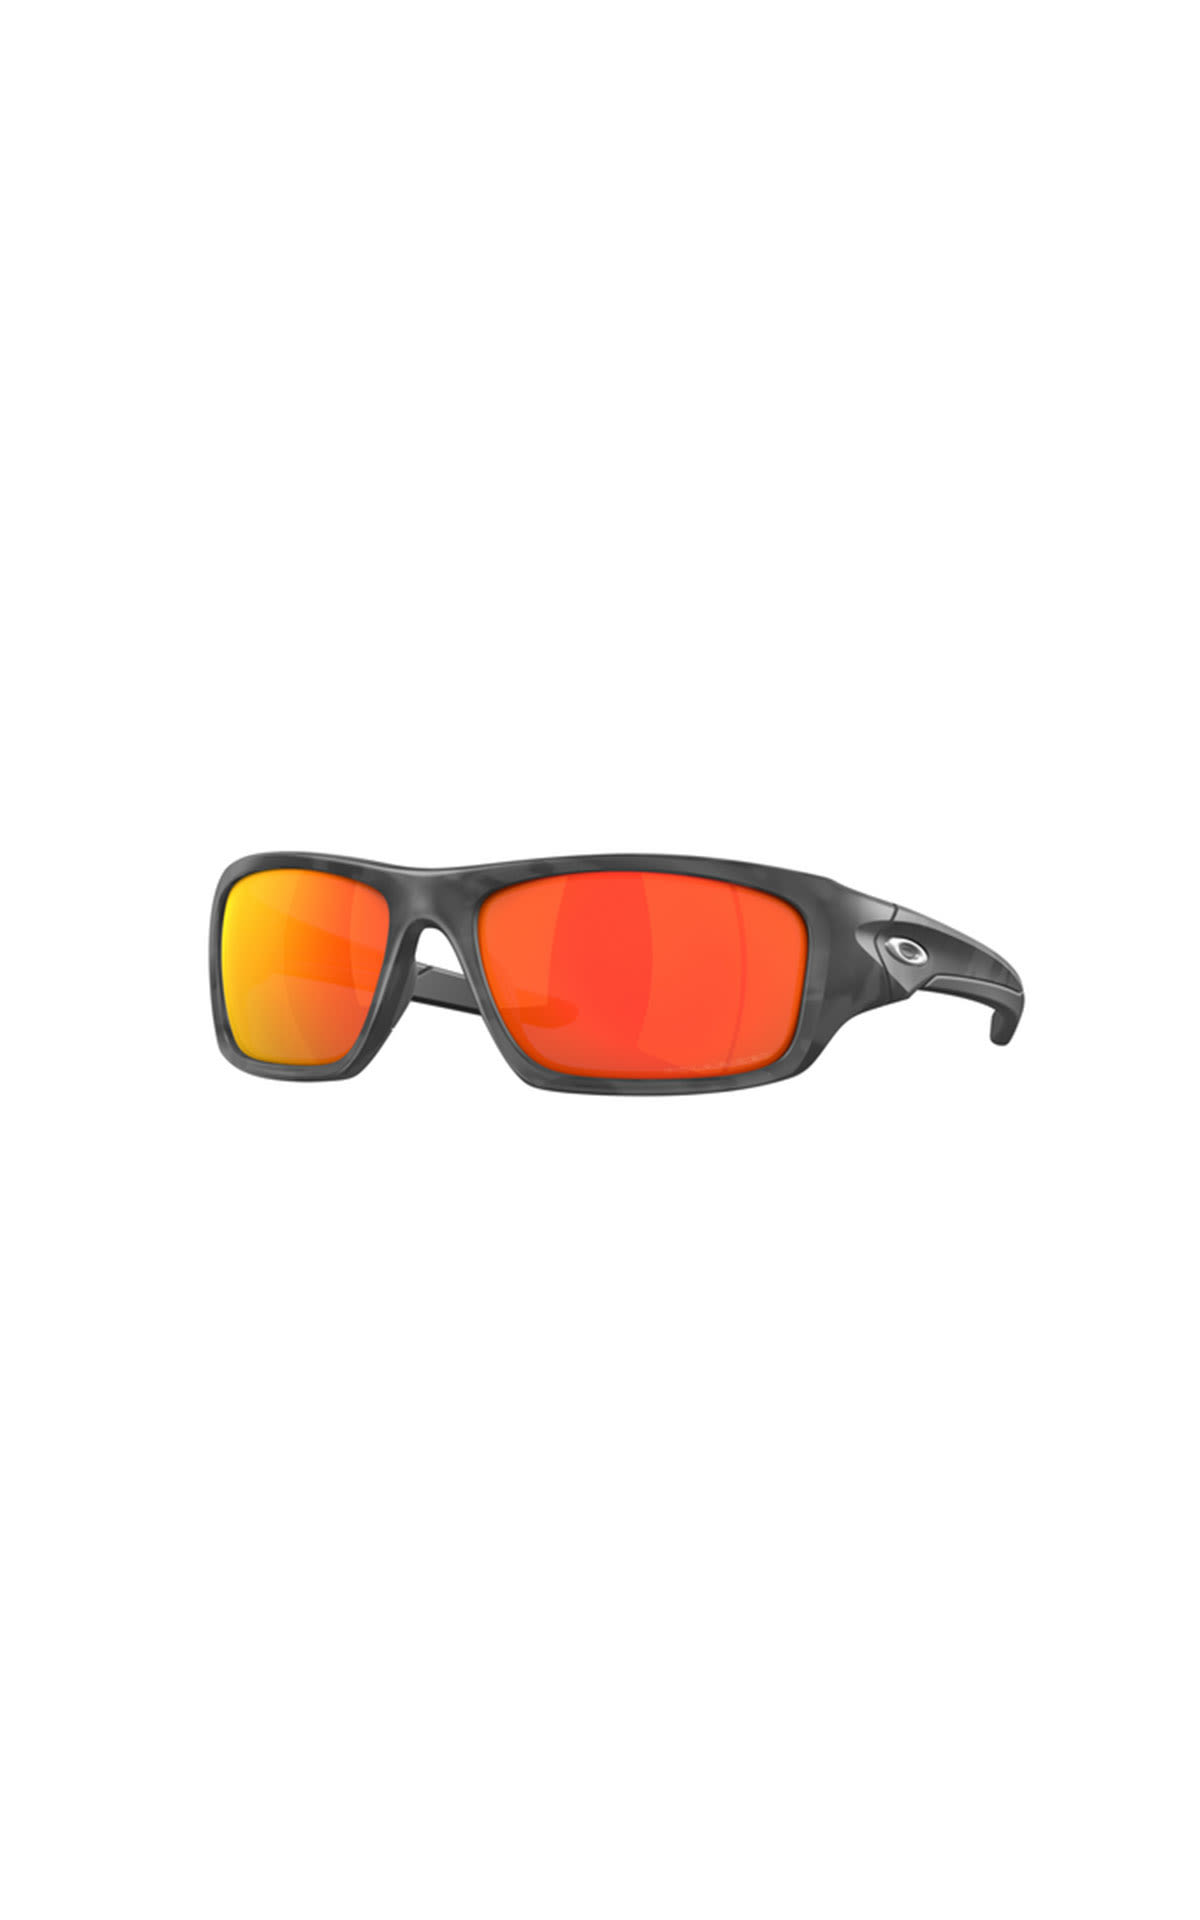 Oakley sunglasses with orange lenses